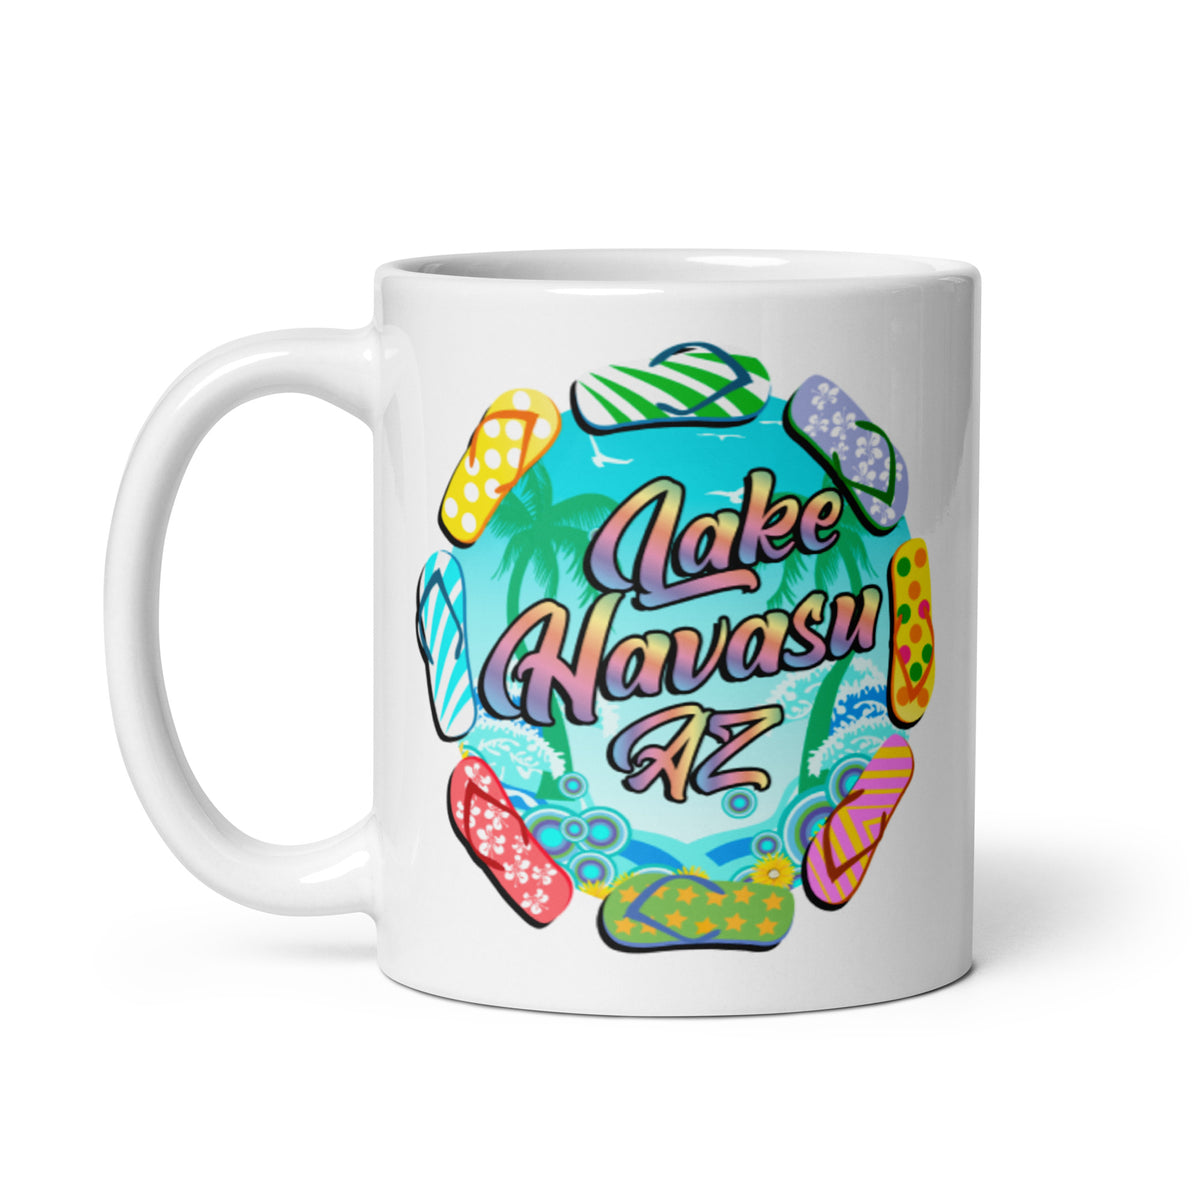 Lake Havasu Flip-Flop Coffe Mug